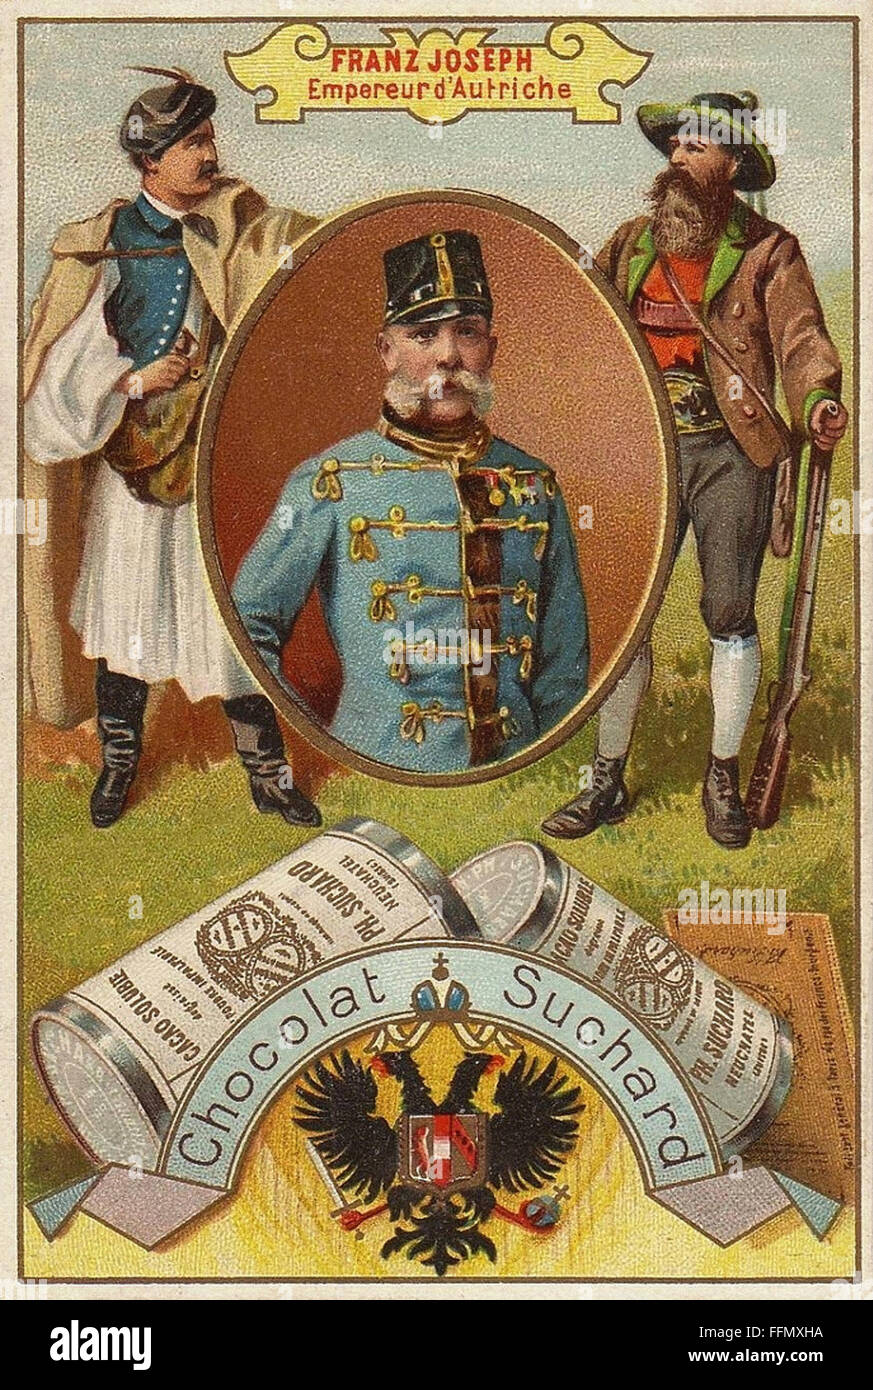 Suchard Chocolat - Franz Joseph Empereur d'Autriche - Cartolina Vintage Foto Stock